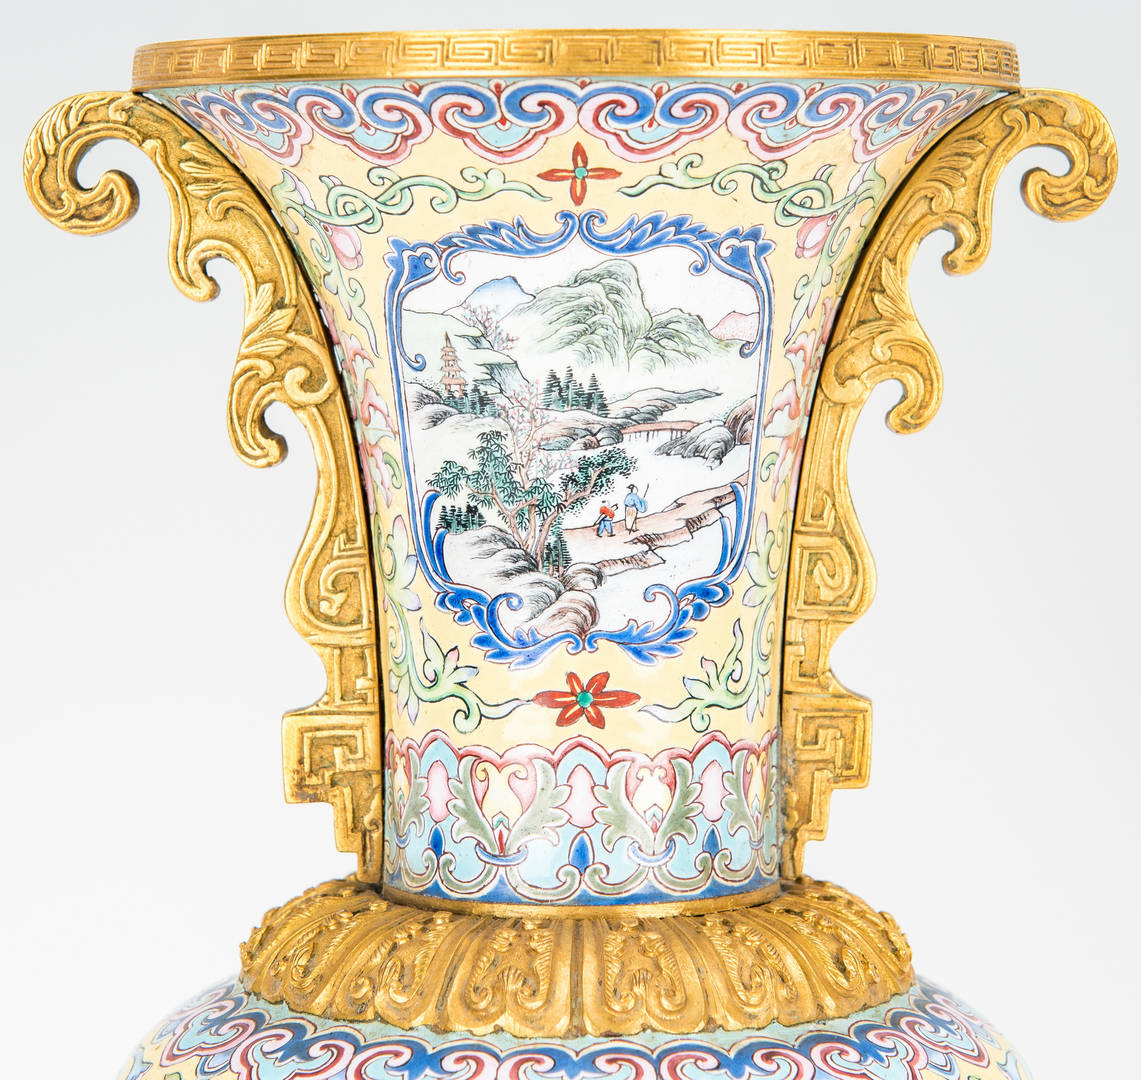 Lot 16: Canton Enamel Vase with Gilt Mounts